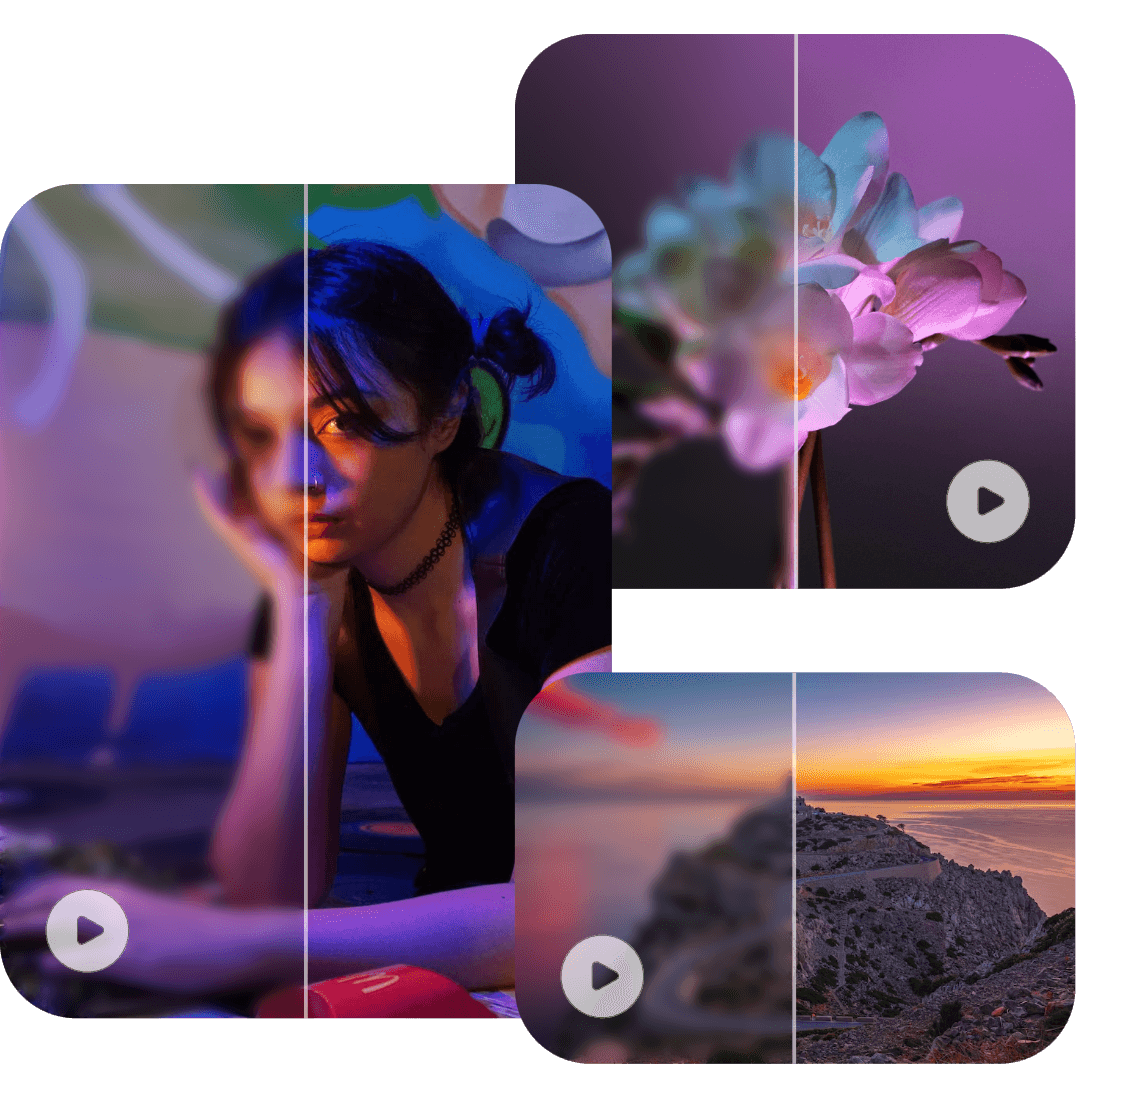 fix blurry sunflower video and enhance details using Clipfly AI video enhancer